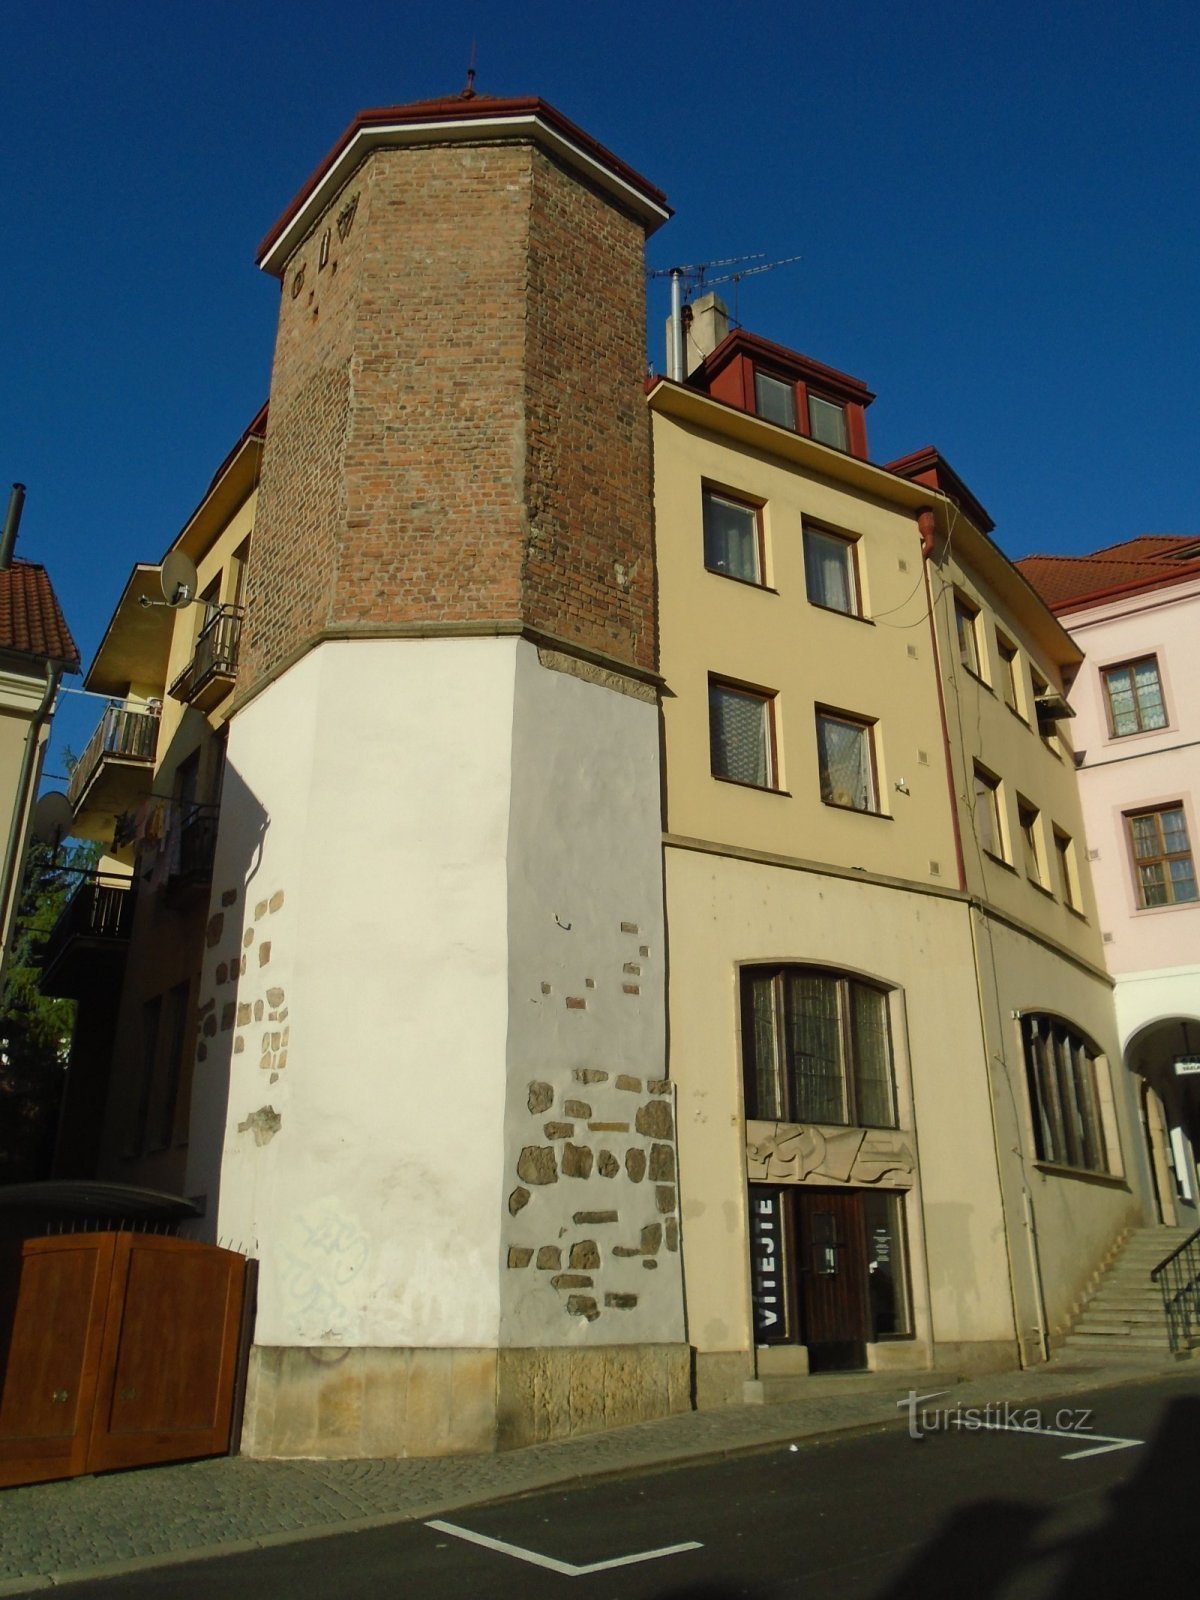 Malé náměstí no. 2 (Hradec Králové、25.4.2020 年 XNUMX 月 XNUMX 日)